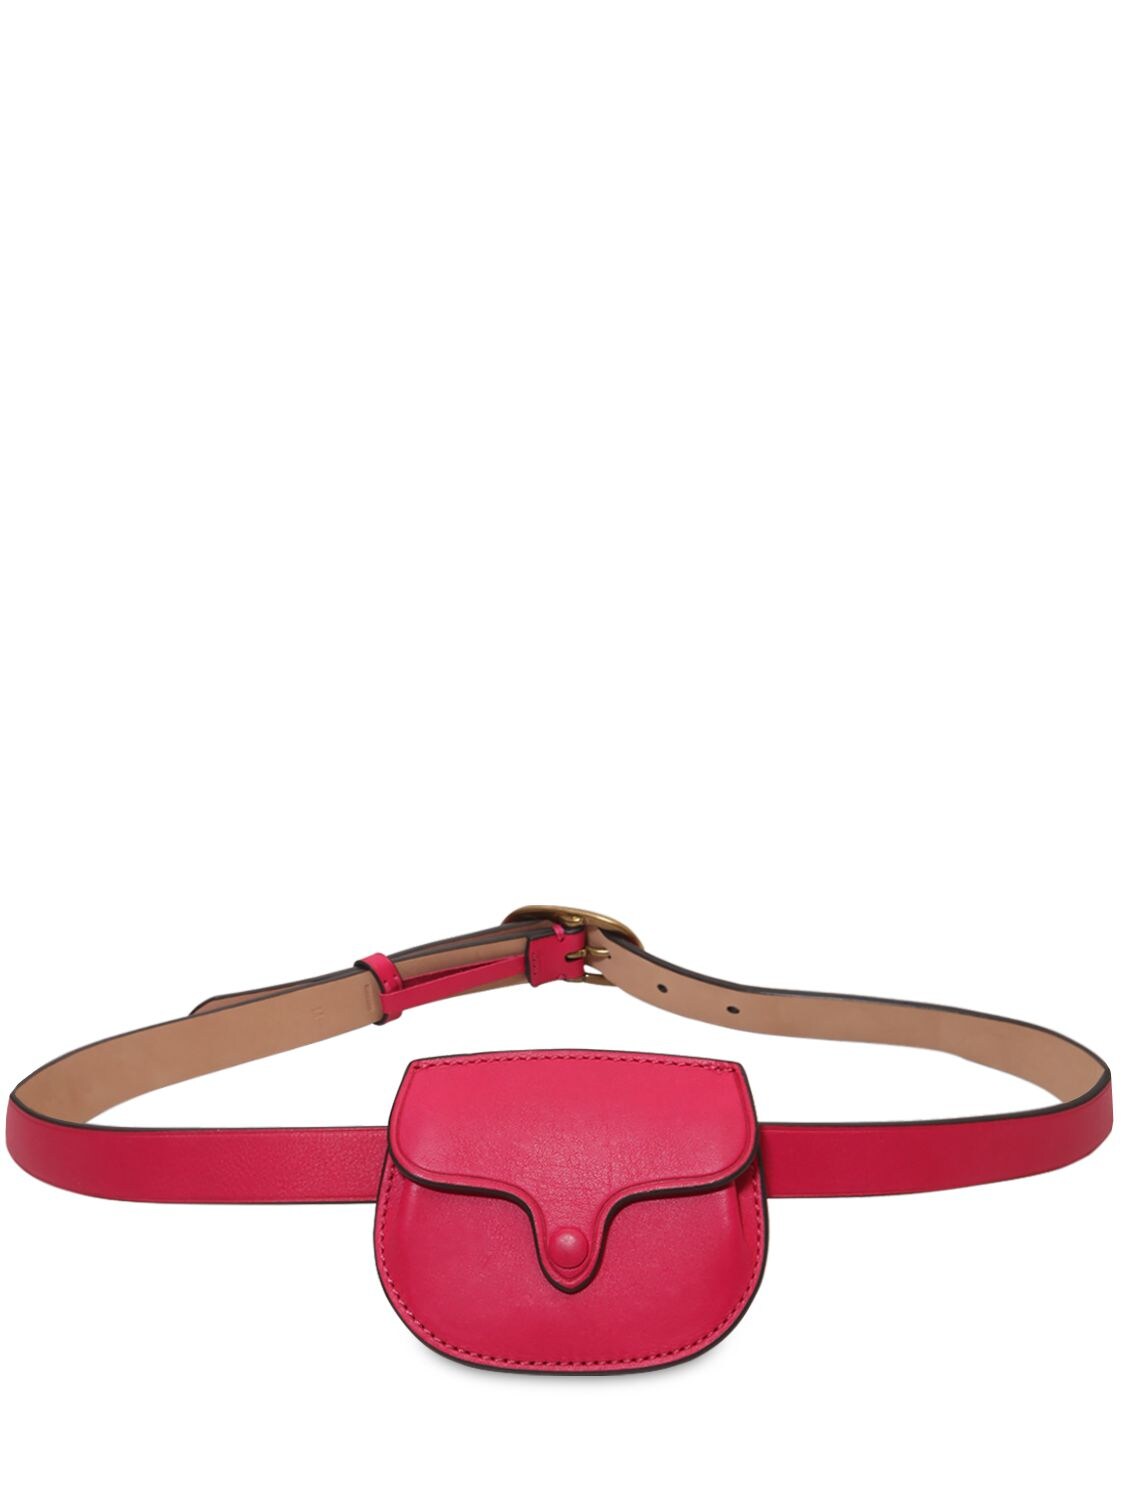 Polo Ralph Lauren Leather Belt Bag In Fuchsia